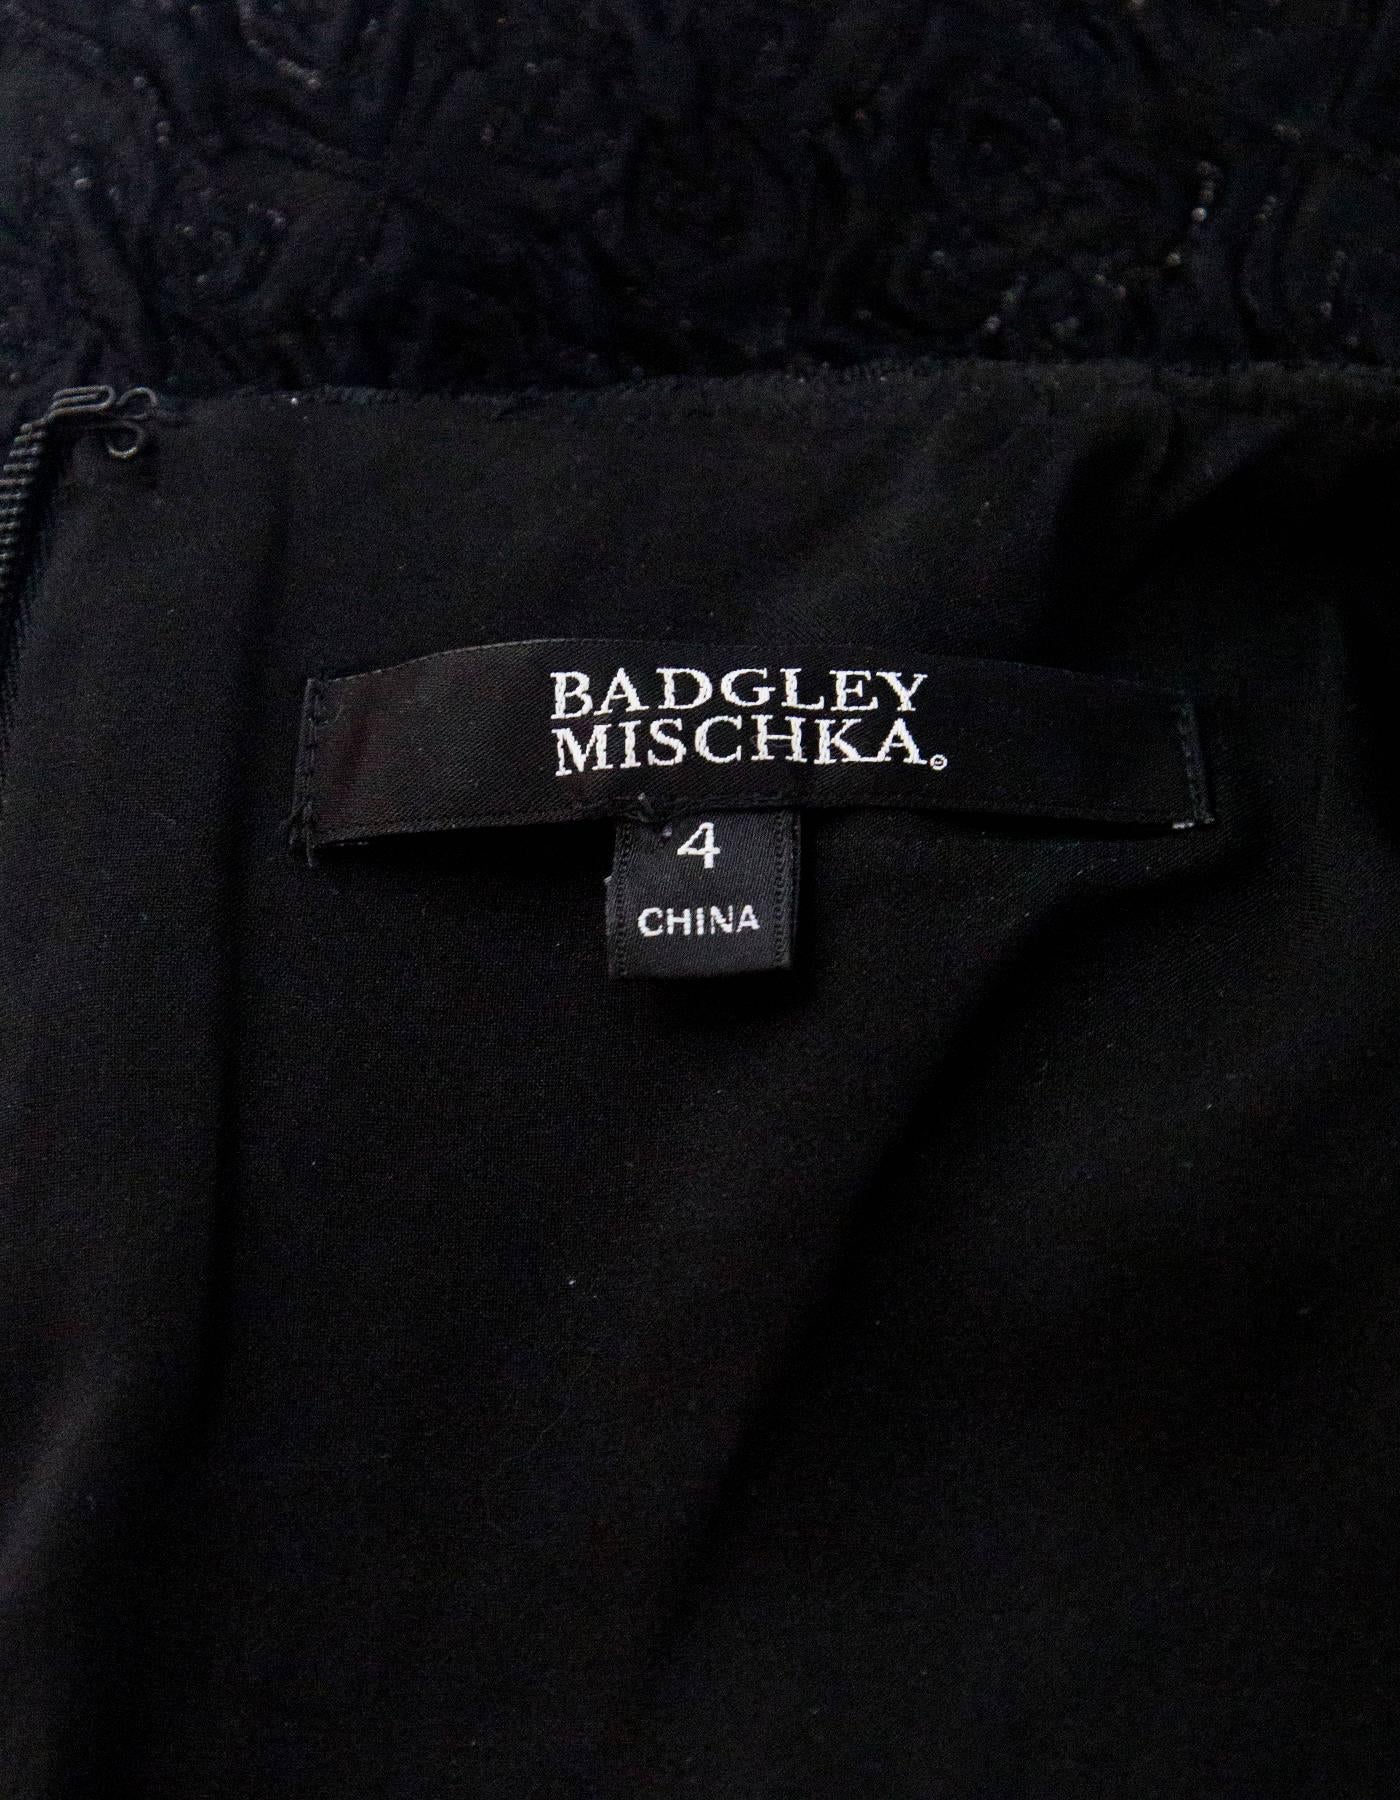 Women's Badgley Mischka Black Brocade Dress with Crystal Buttons Sz 4 NWT